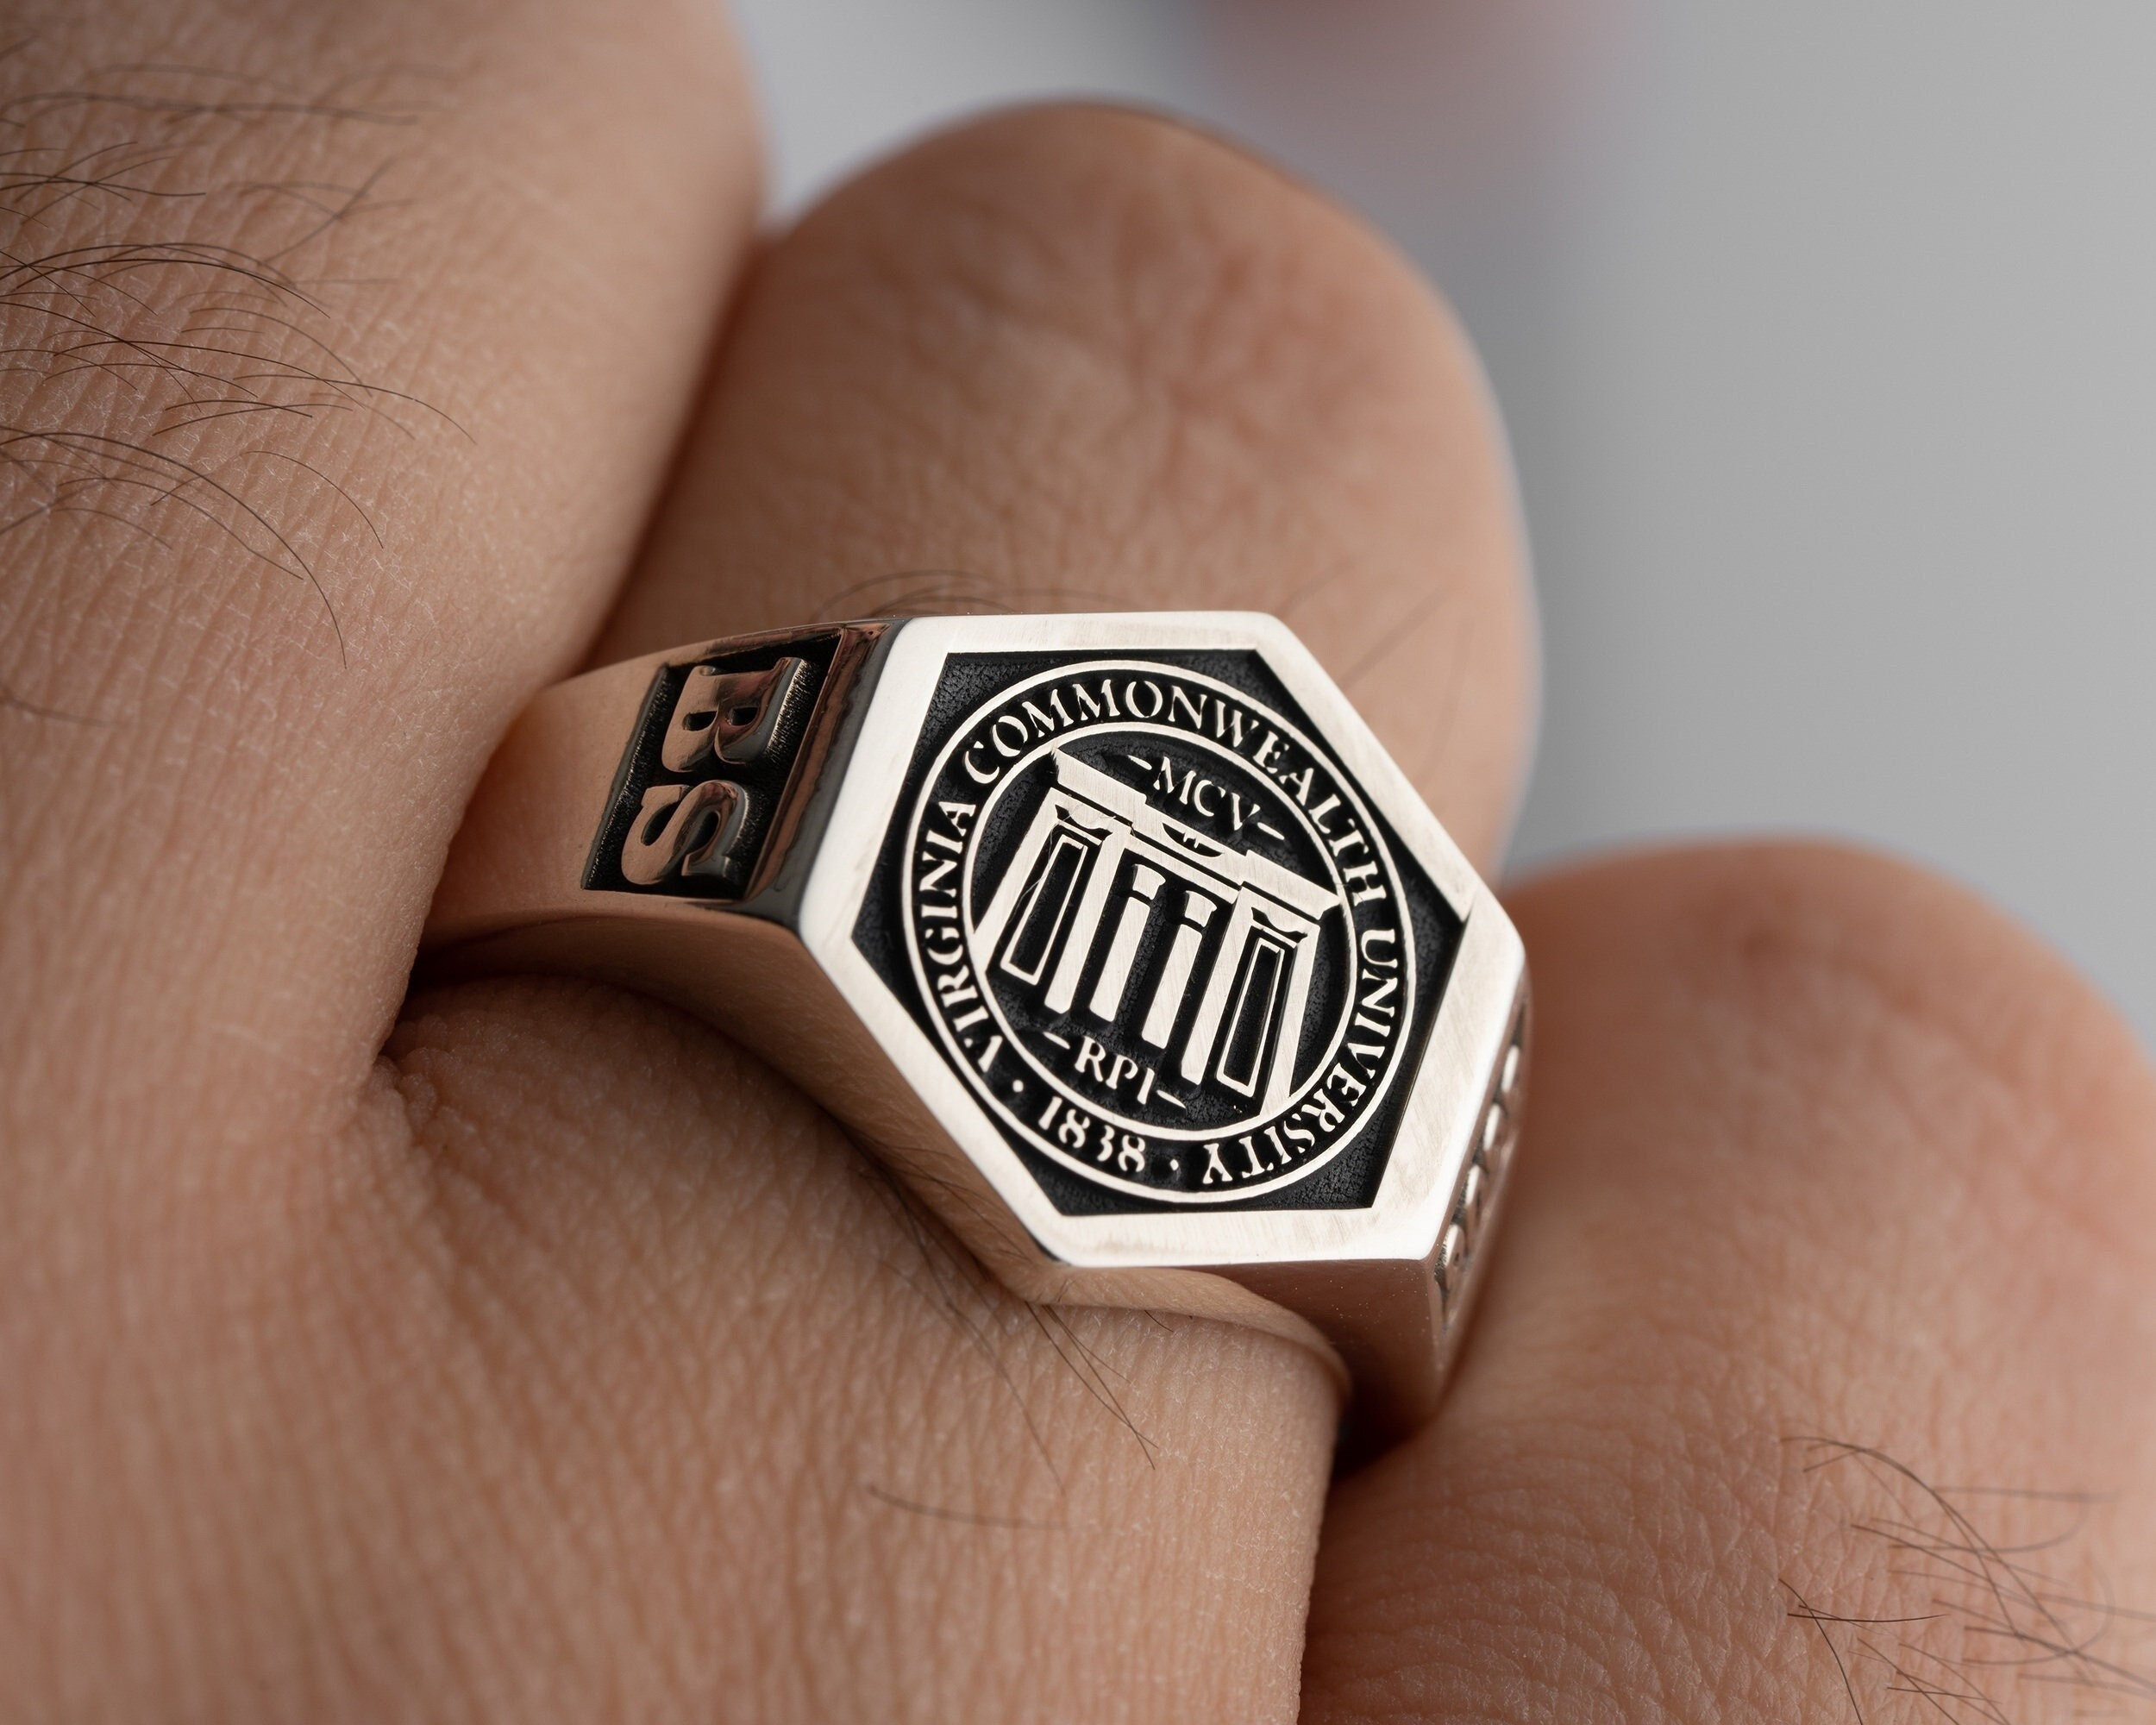 Johns Hopkins University Key Ring by M.LaHart & Co.